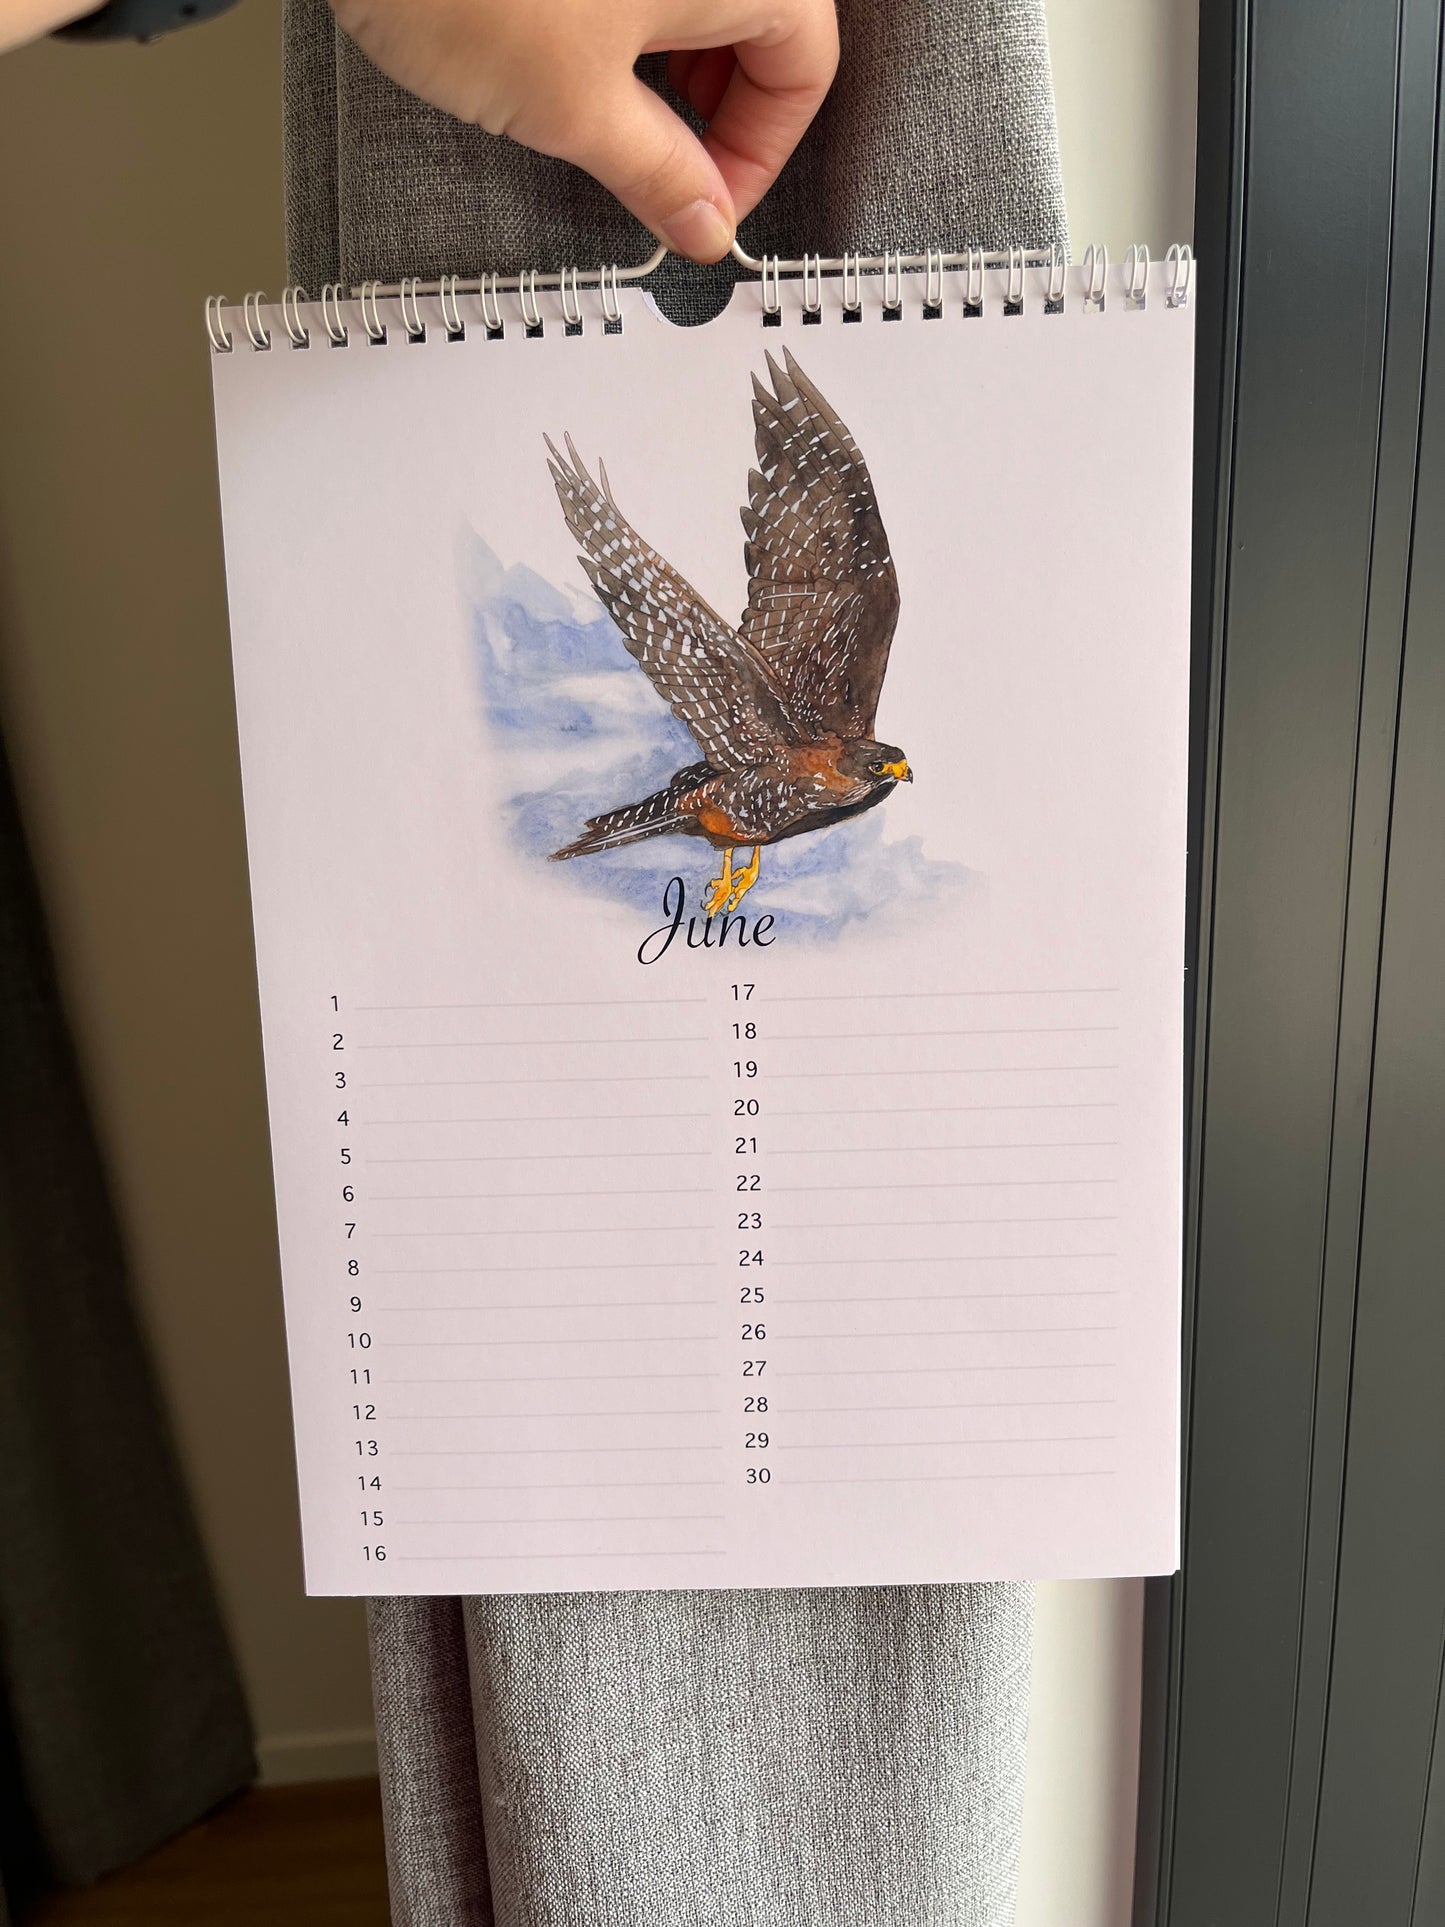 Birds Perpetual Calendar